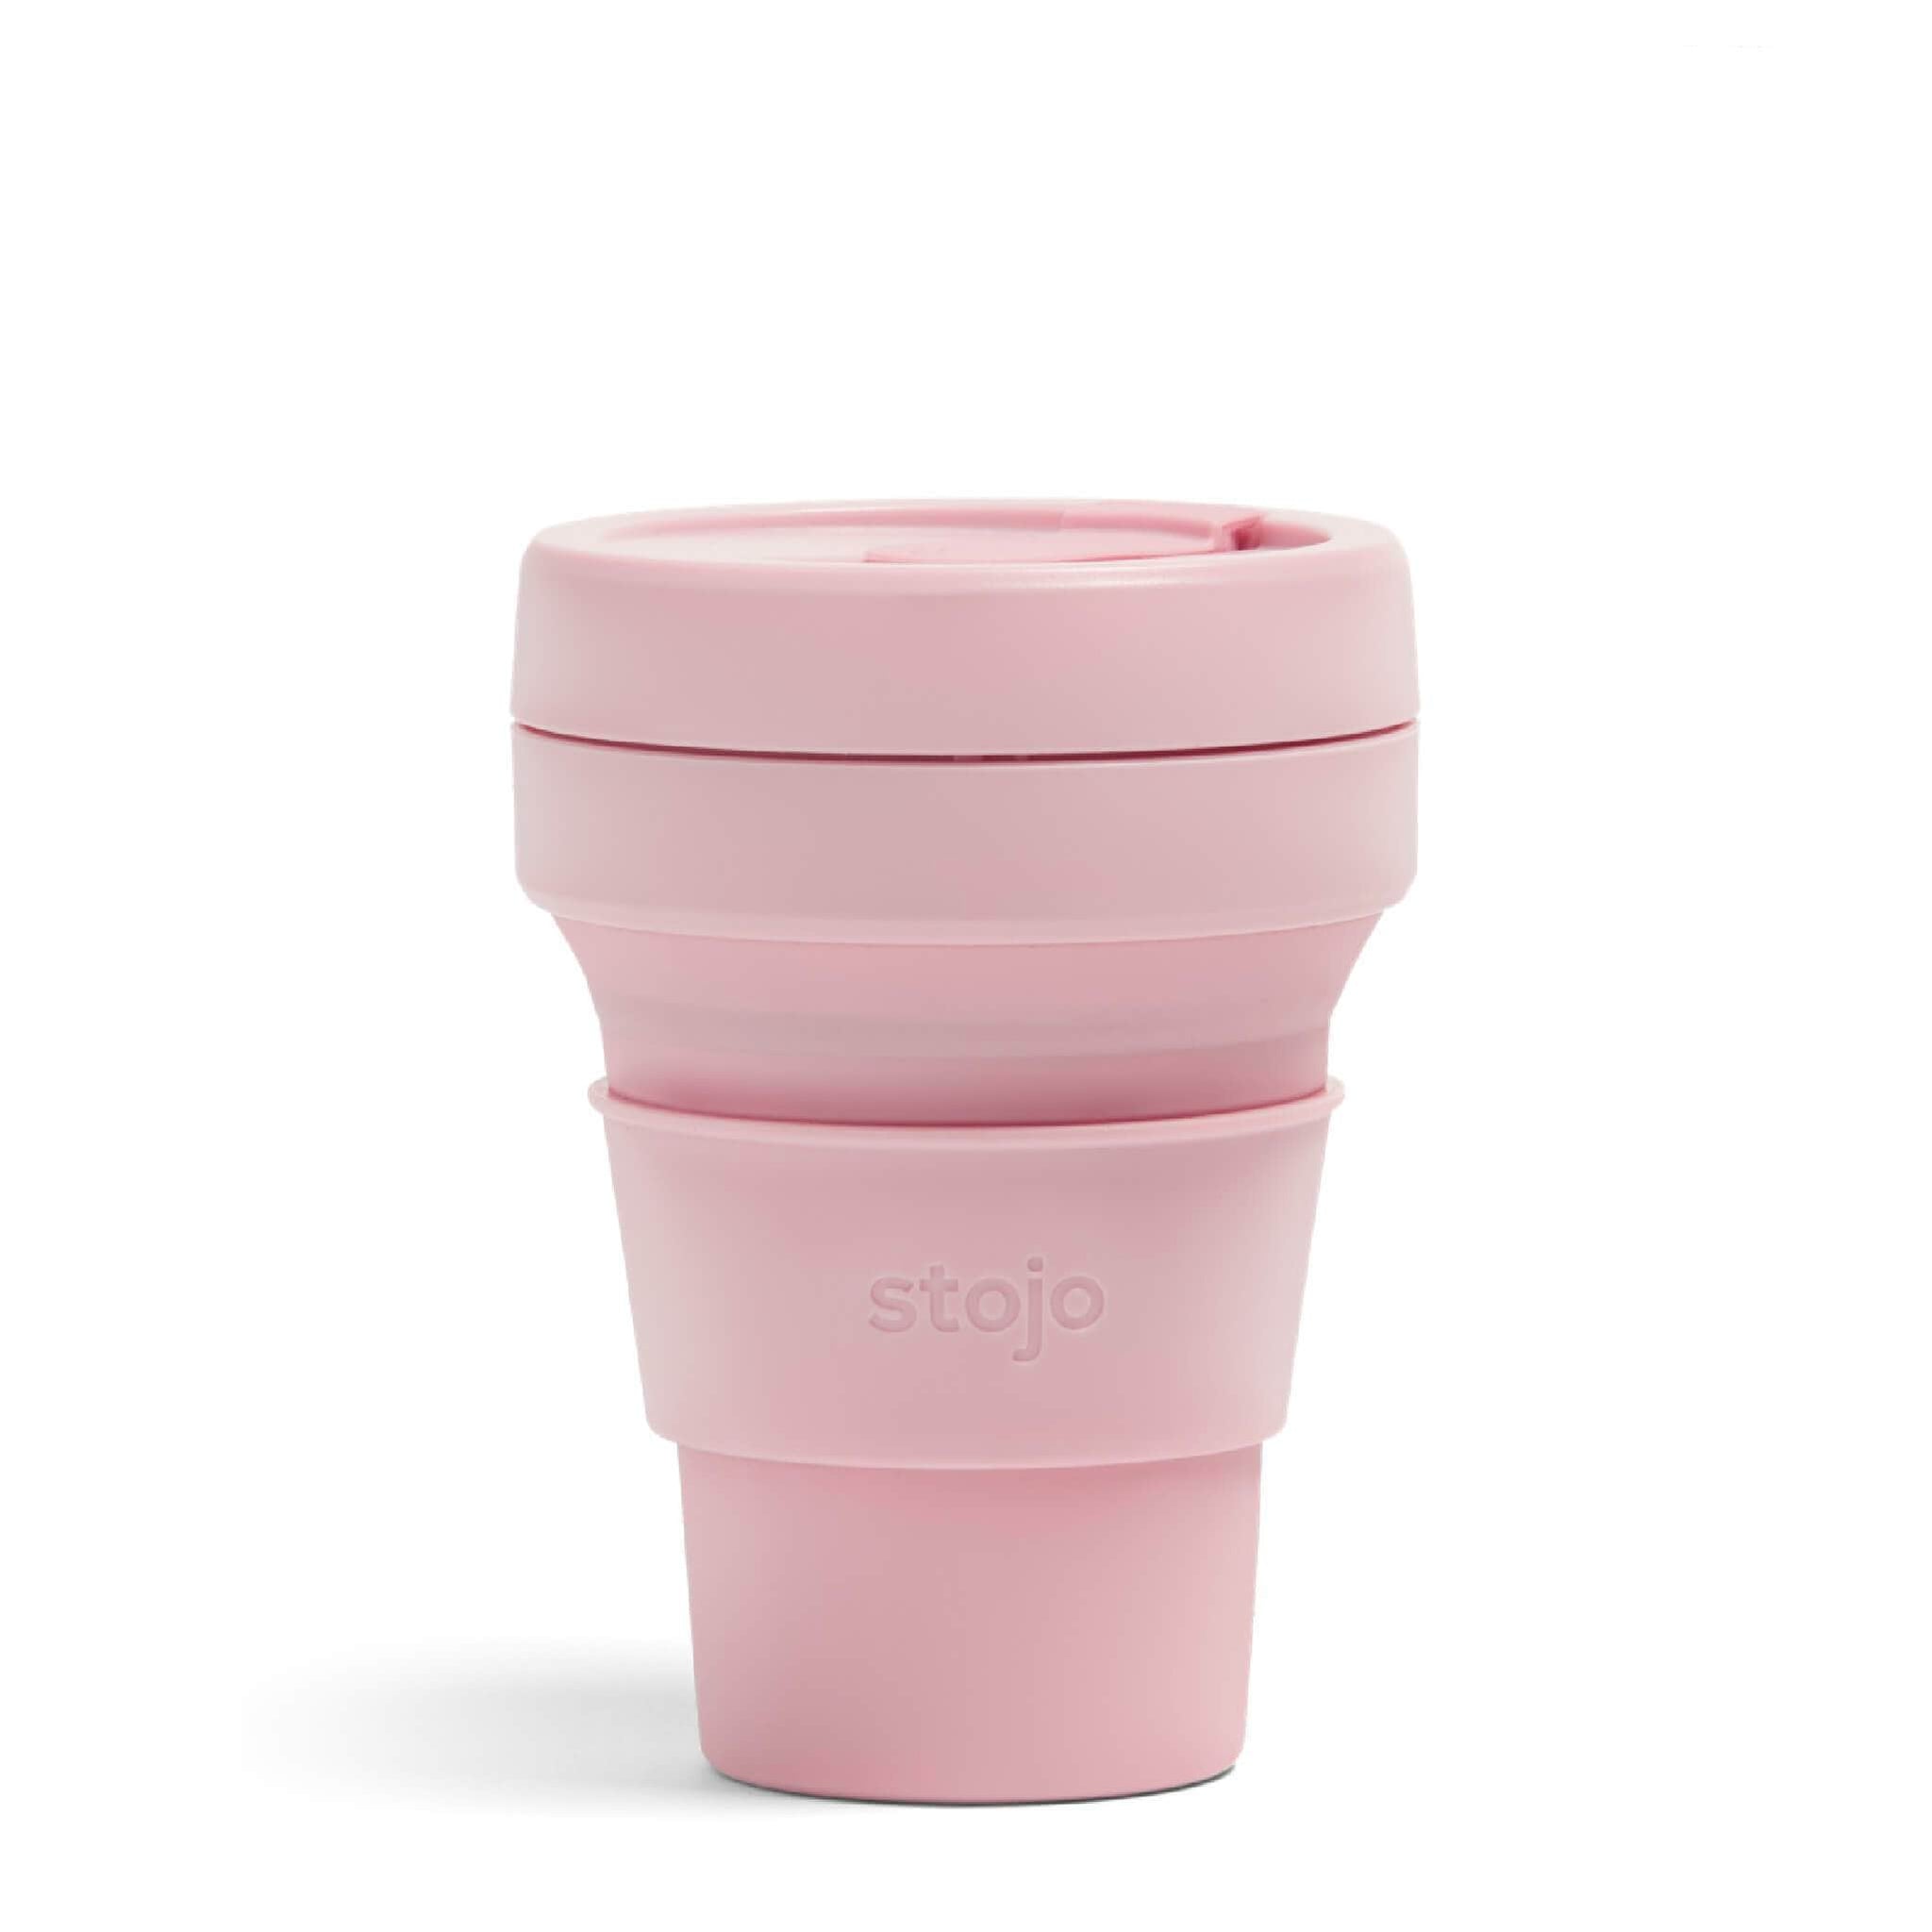 Vaso de silicona plegable Stojo de 12 onzas / 335ml de color rosa